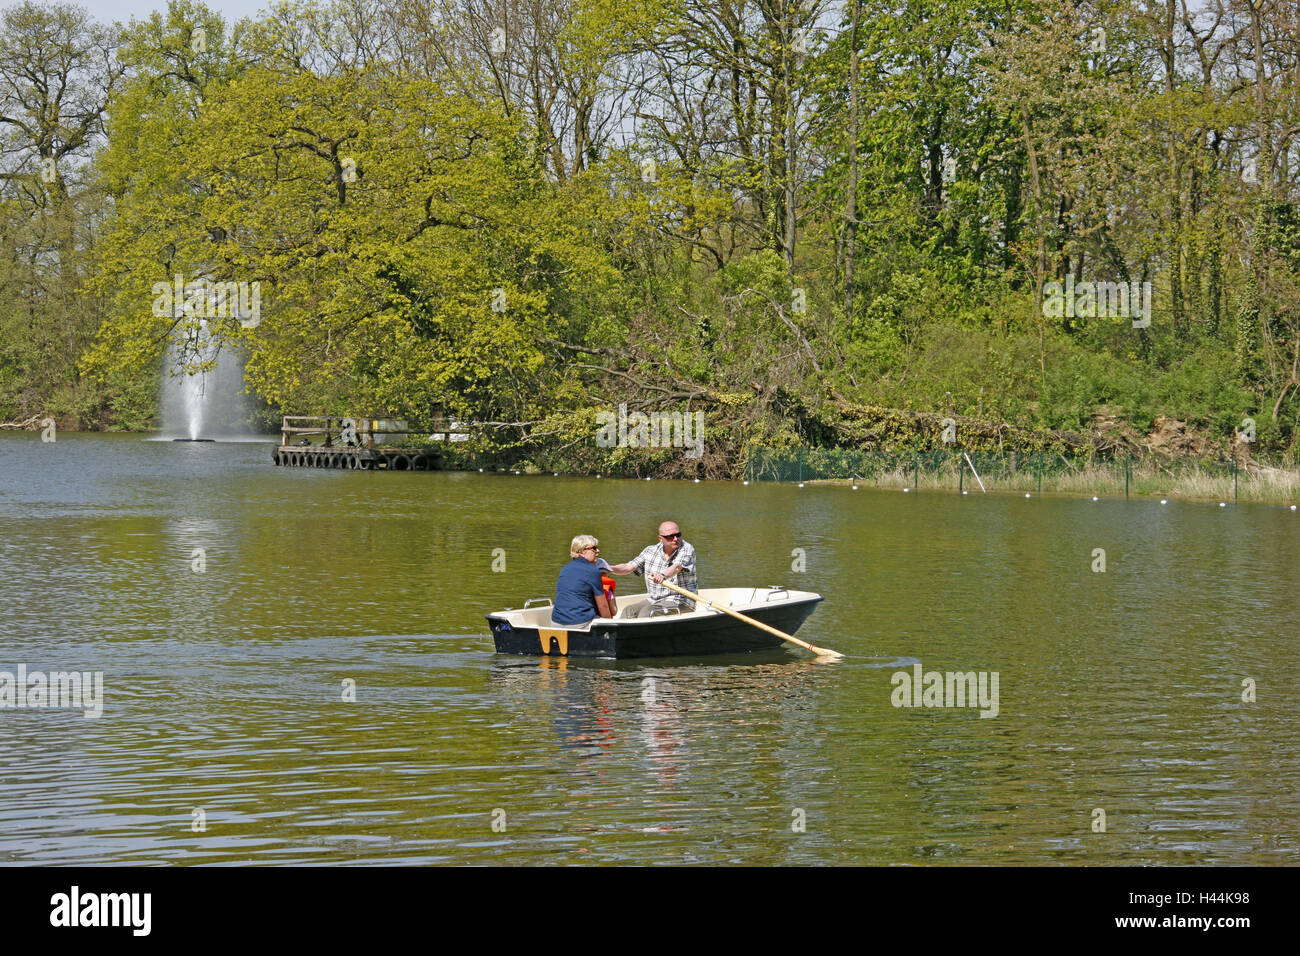 Pond, oar boat, familia, aguas, jet, persona, jubilados, barco, turismo, Alemania, Hessen, Foto de stock